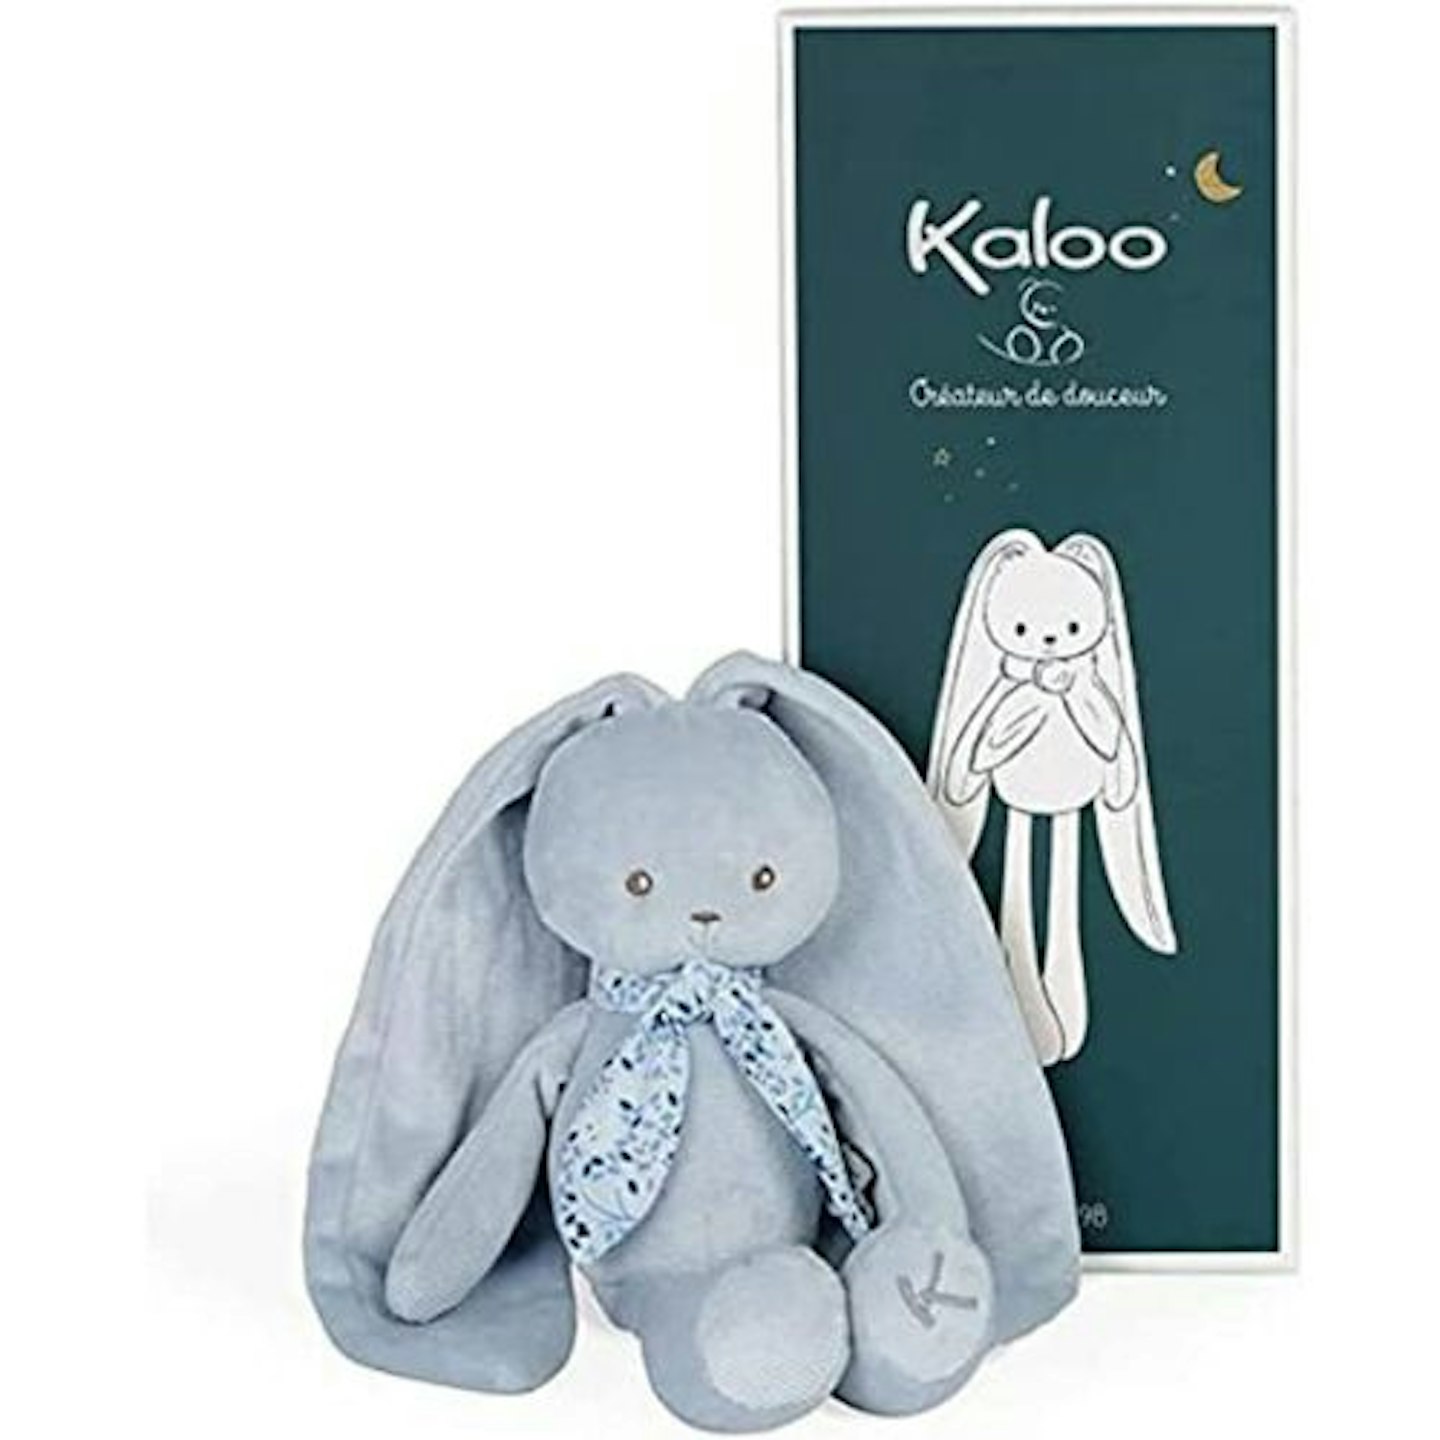 Kaloo Lapinoo rabbit best soft toys